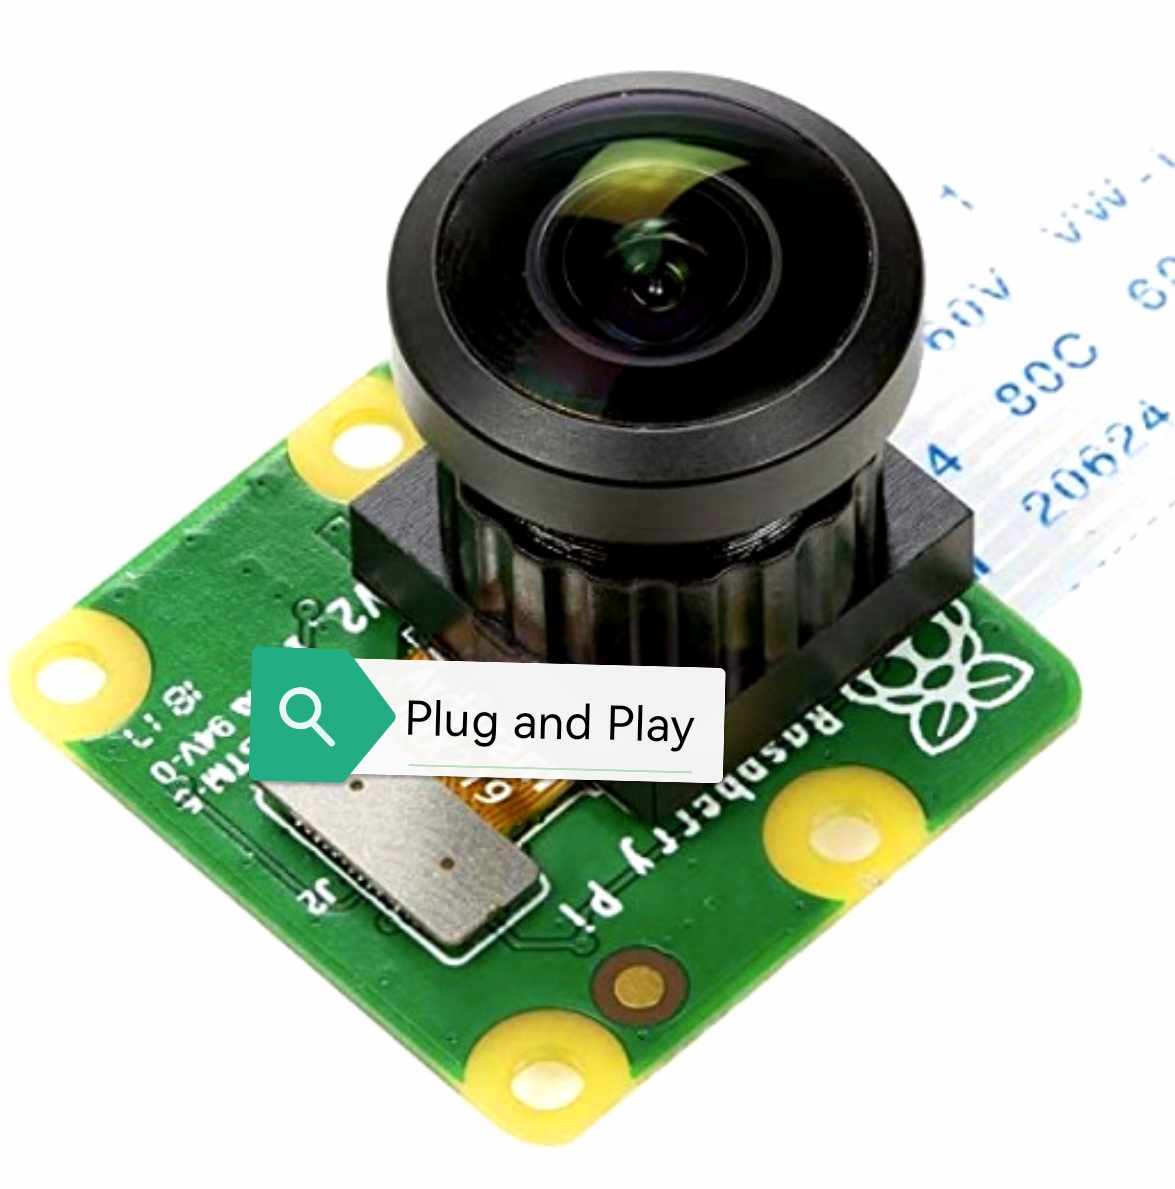 8MP Wide Angle Camera Module, IMX219 Sensor with 175 Degrees FoV Diagonal